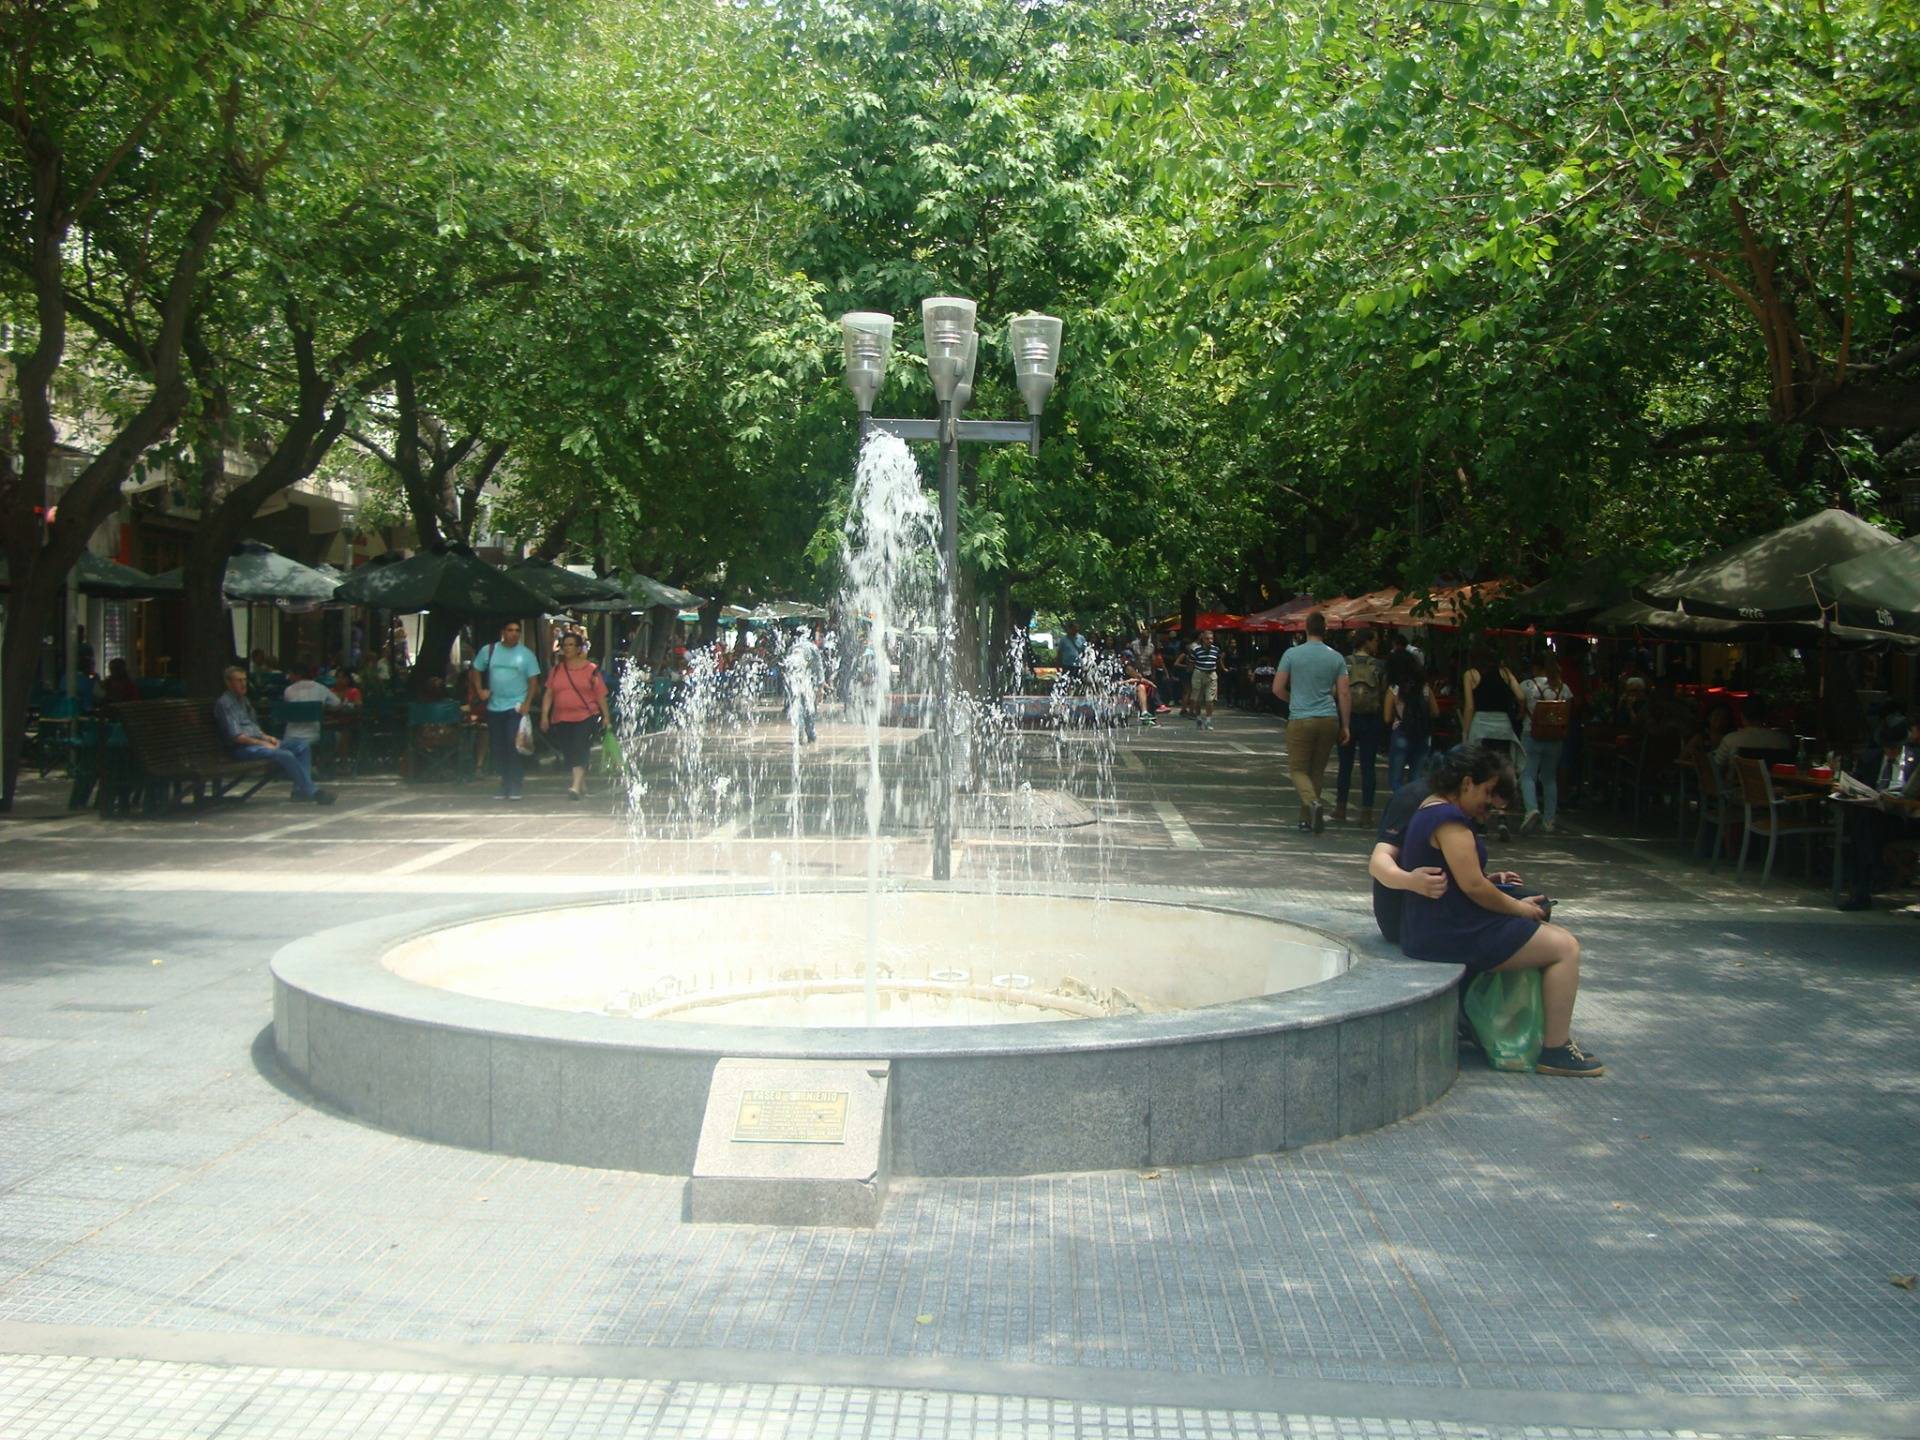 Paseo Sarmiento, also known as the pedestrian